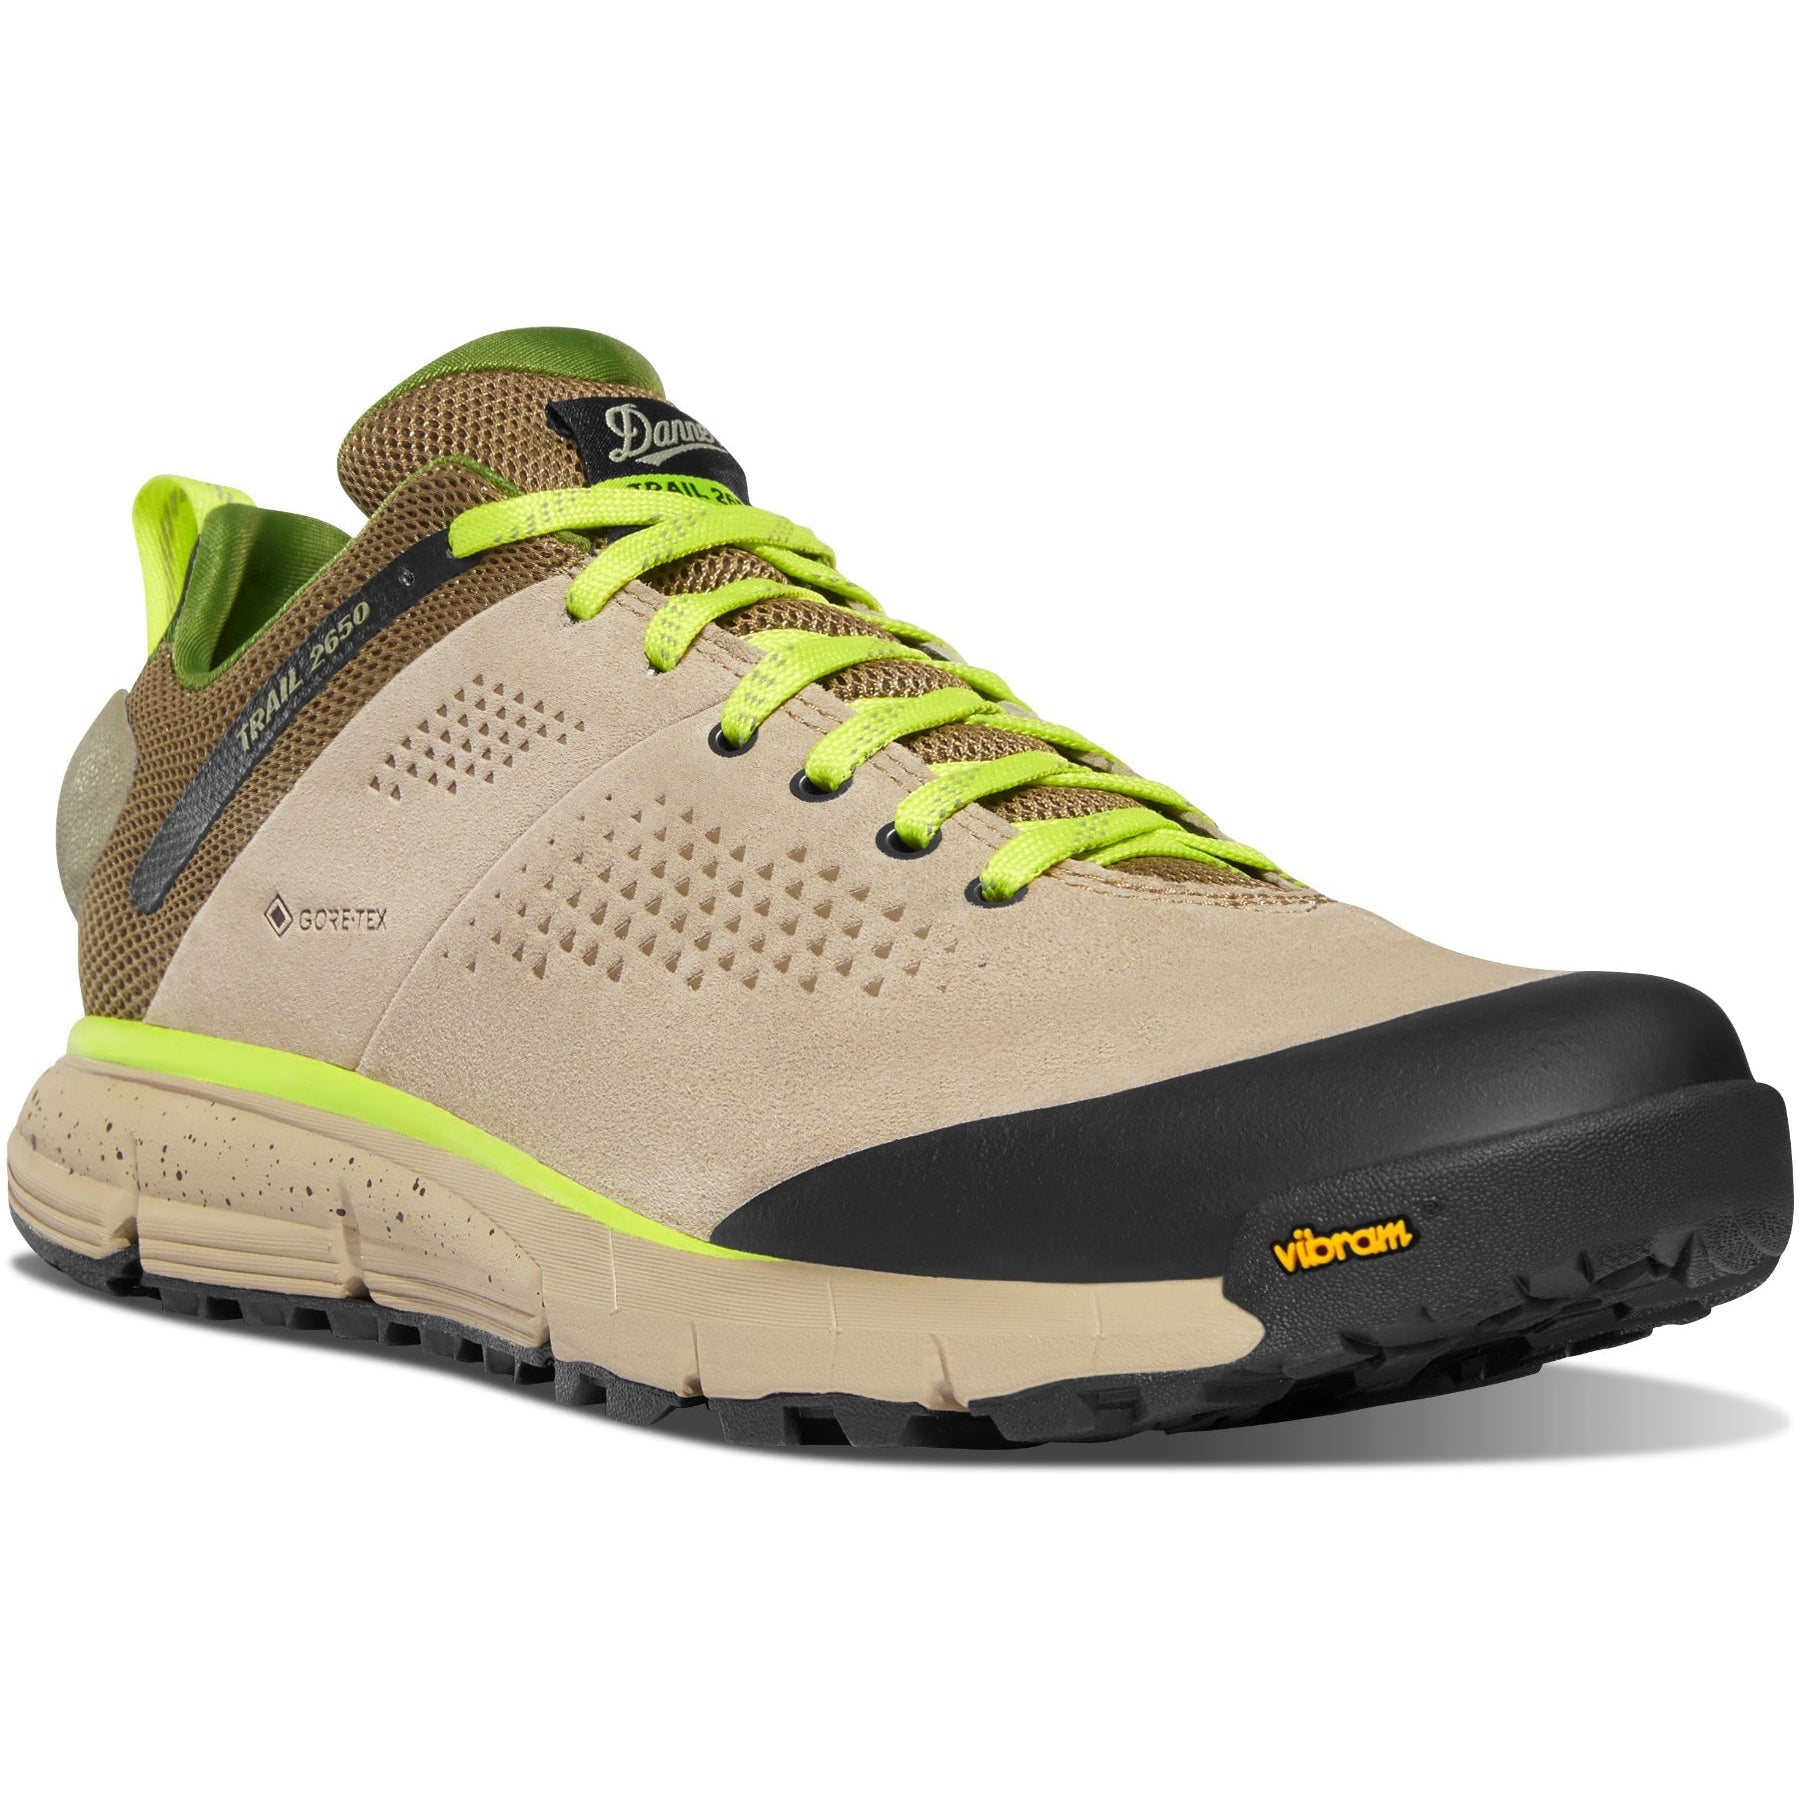 Danner Men's Trail 2650 GTX 3" WP Hiking Shoe - Tan - 61214 7 / Medium / Tan - Overlook Boots